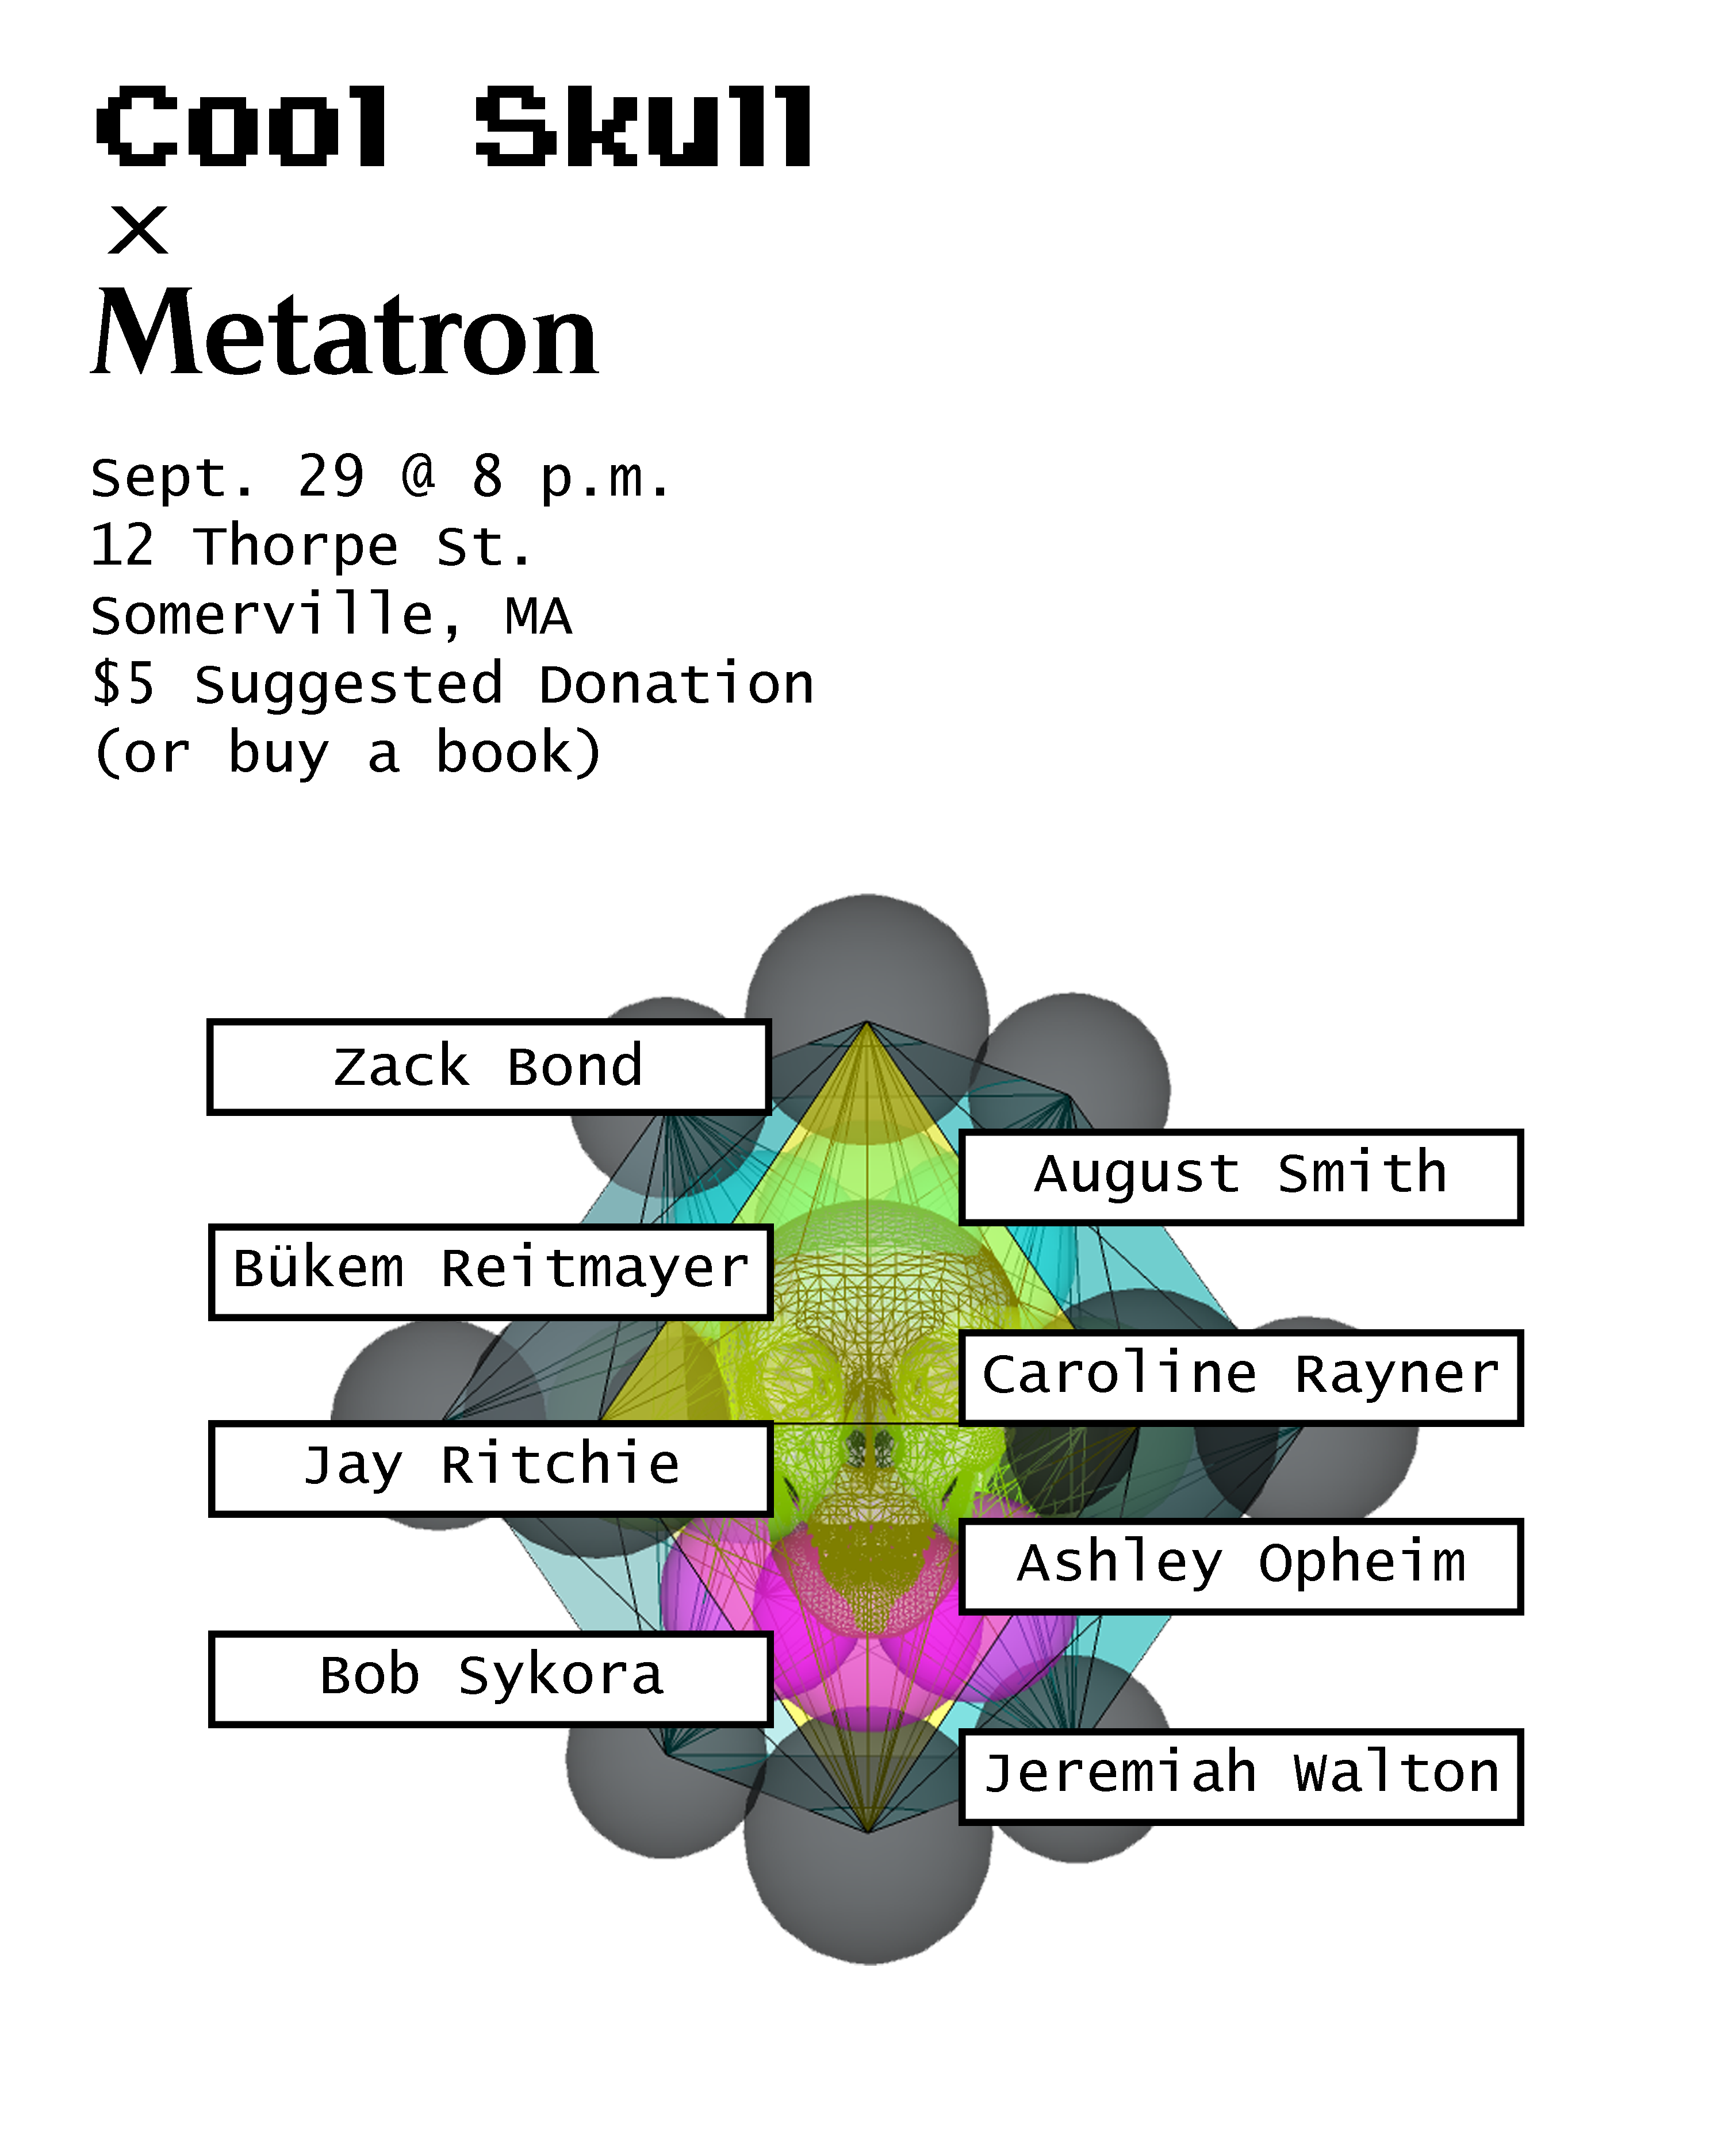 cool skull metatron poster